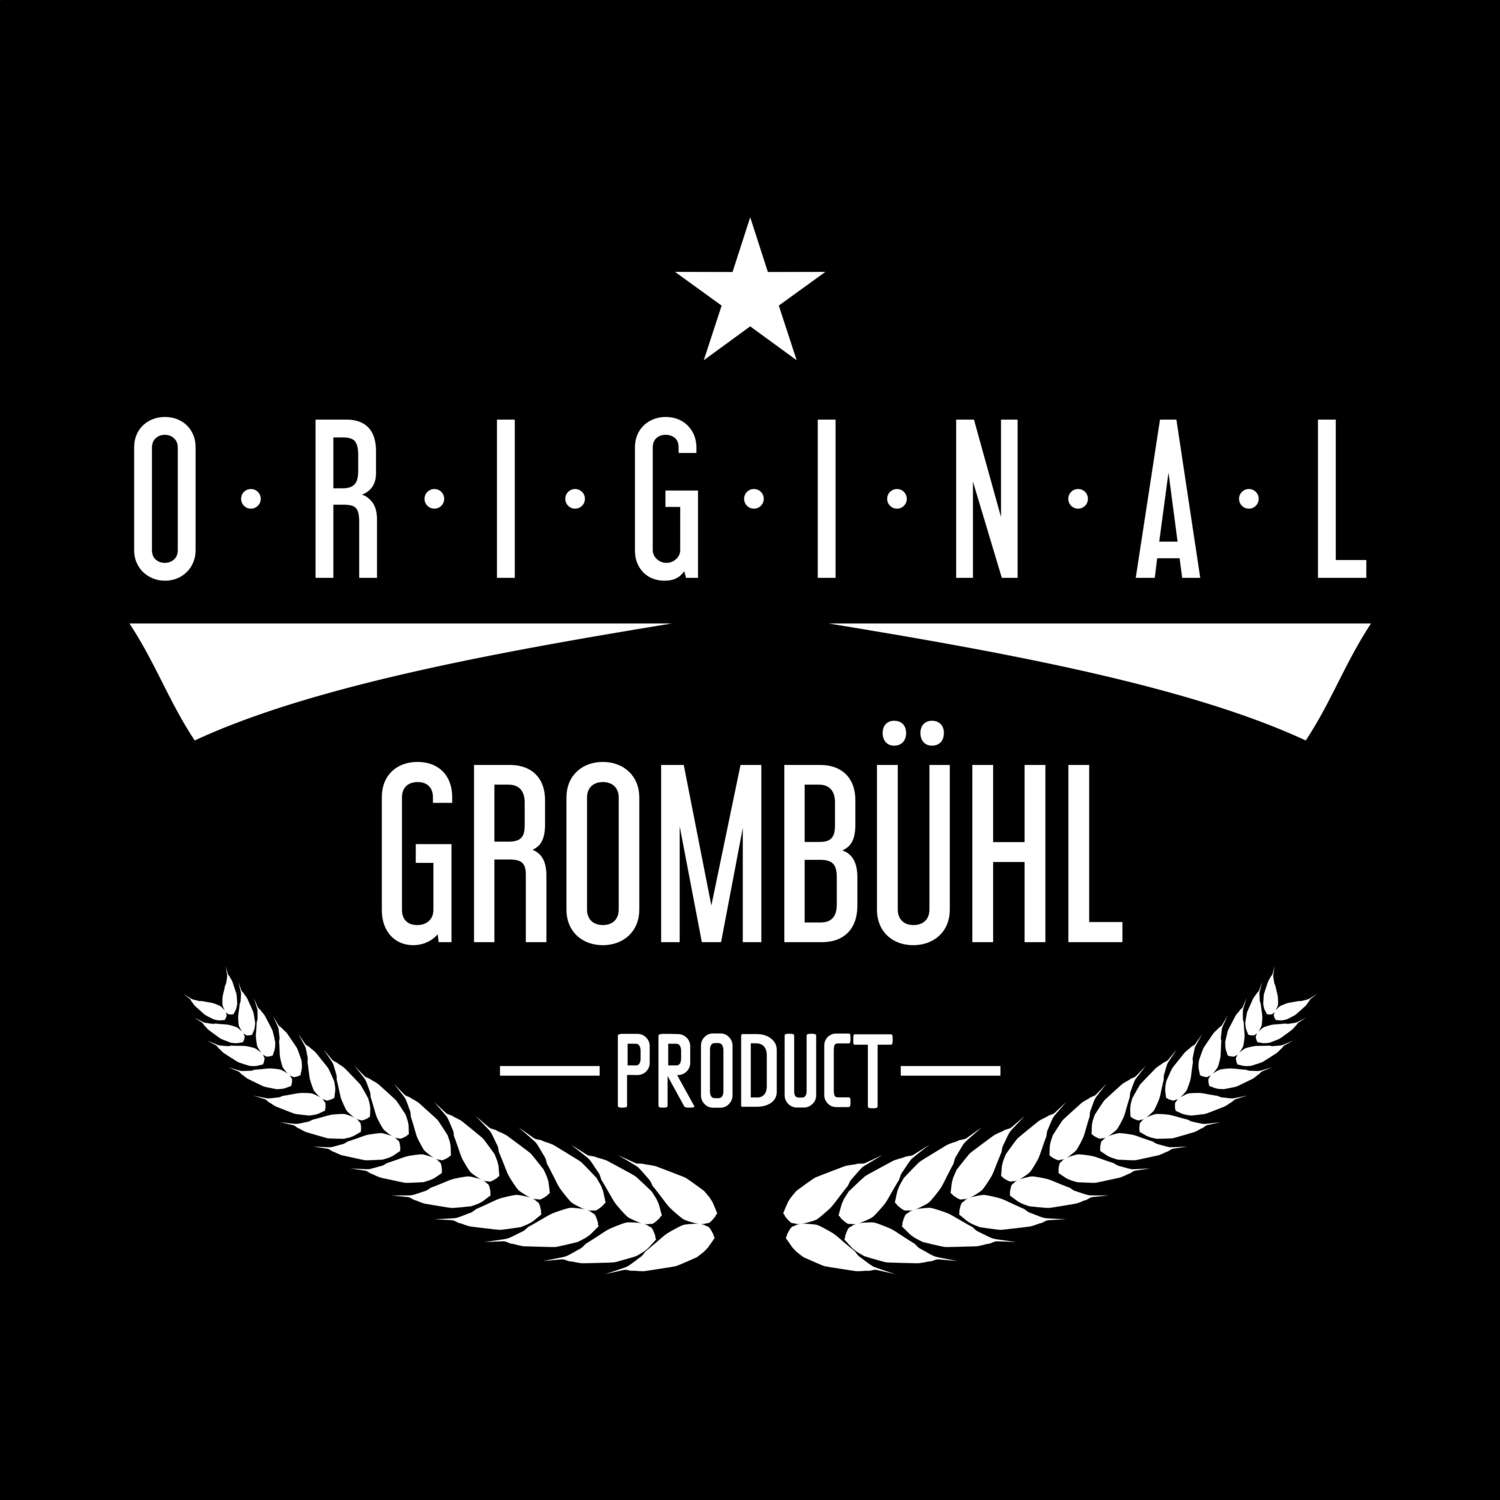 Grombühl T-Shirt »Original Product«